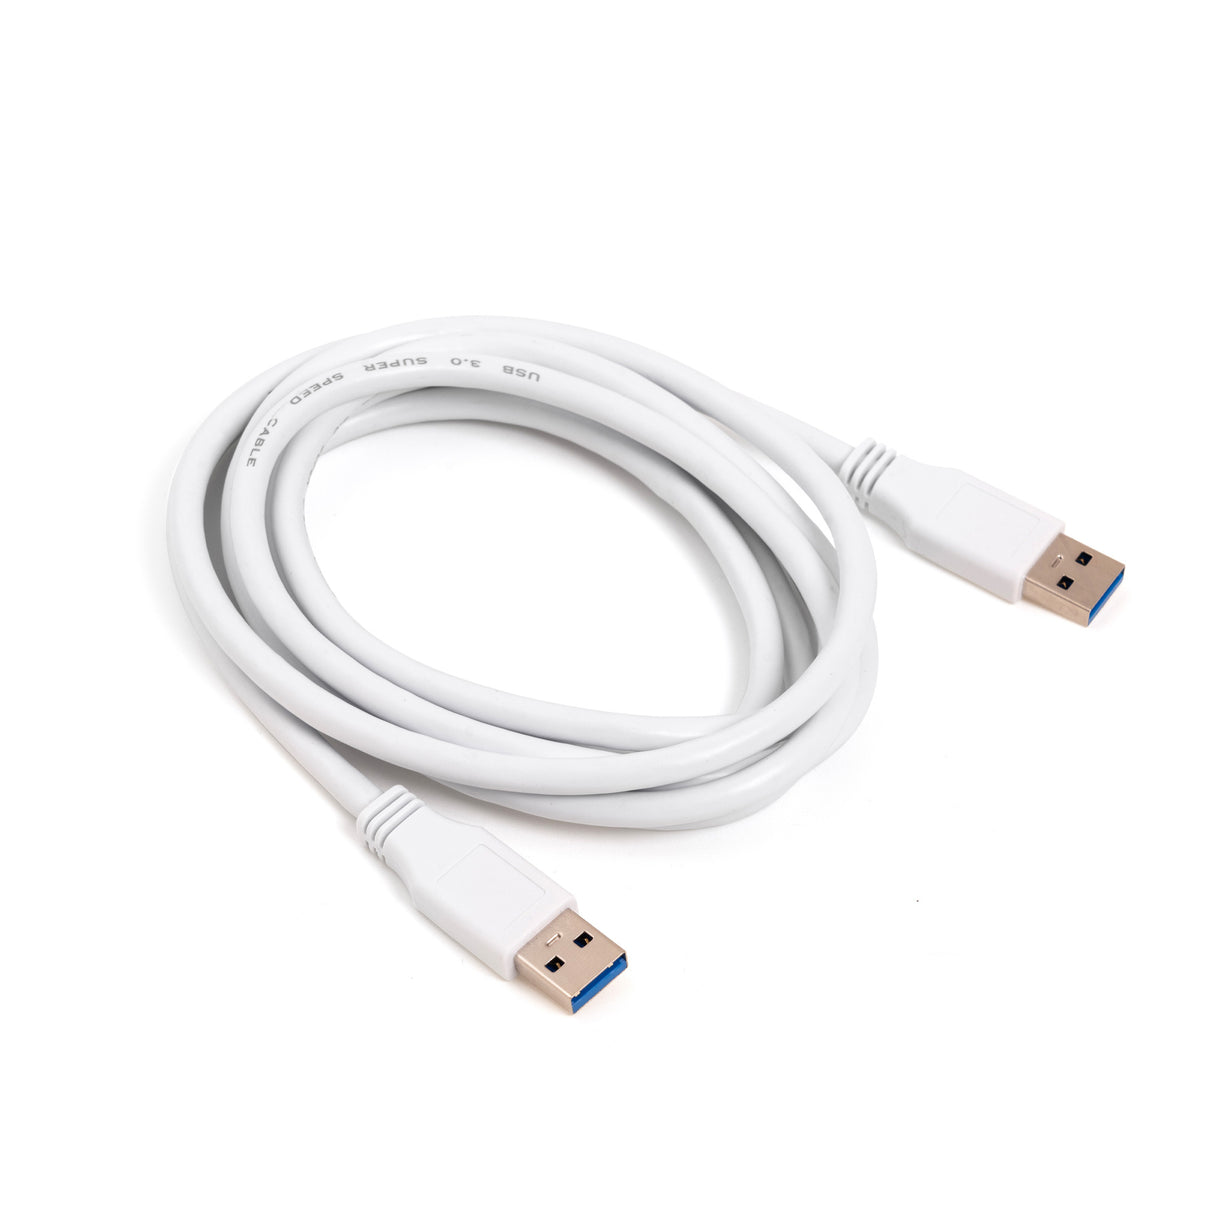 Cable USB 3.0 macho-macho de 2 metros AV0479C